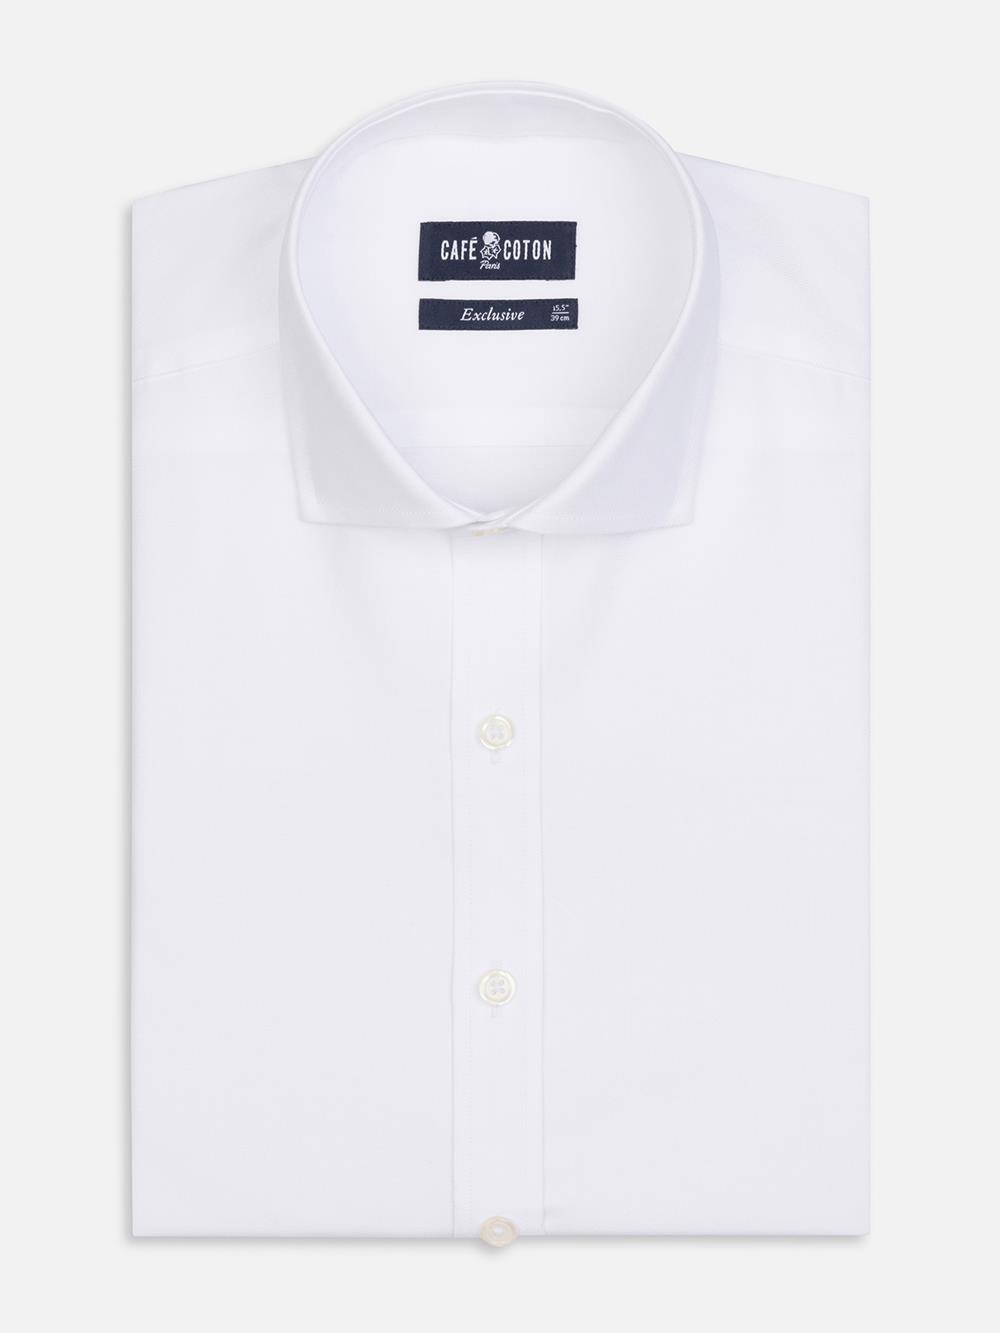 White oxford shirt